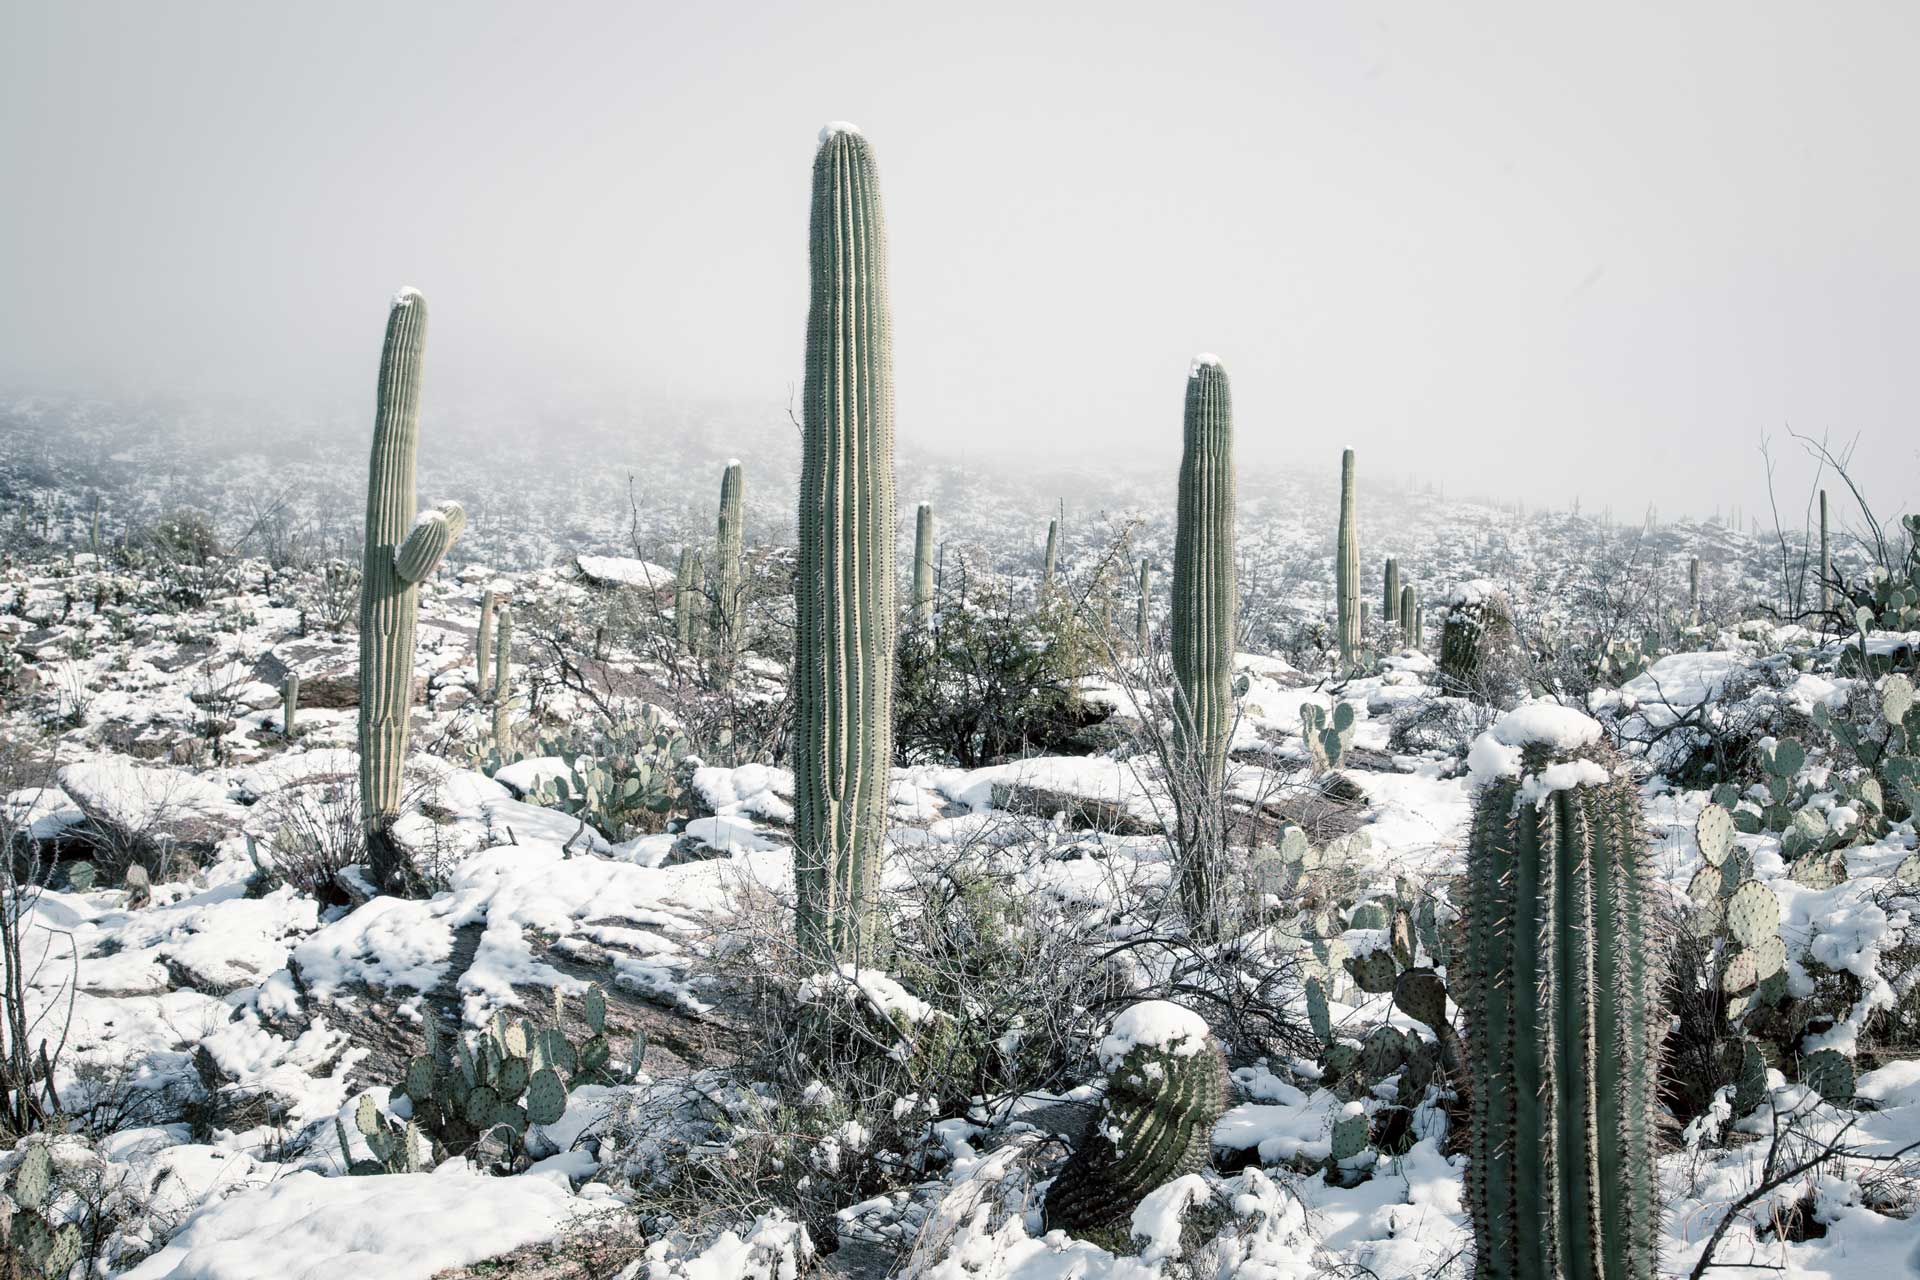 The Buzz: Arizona and snow